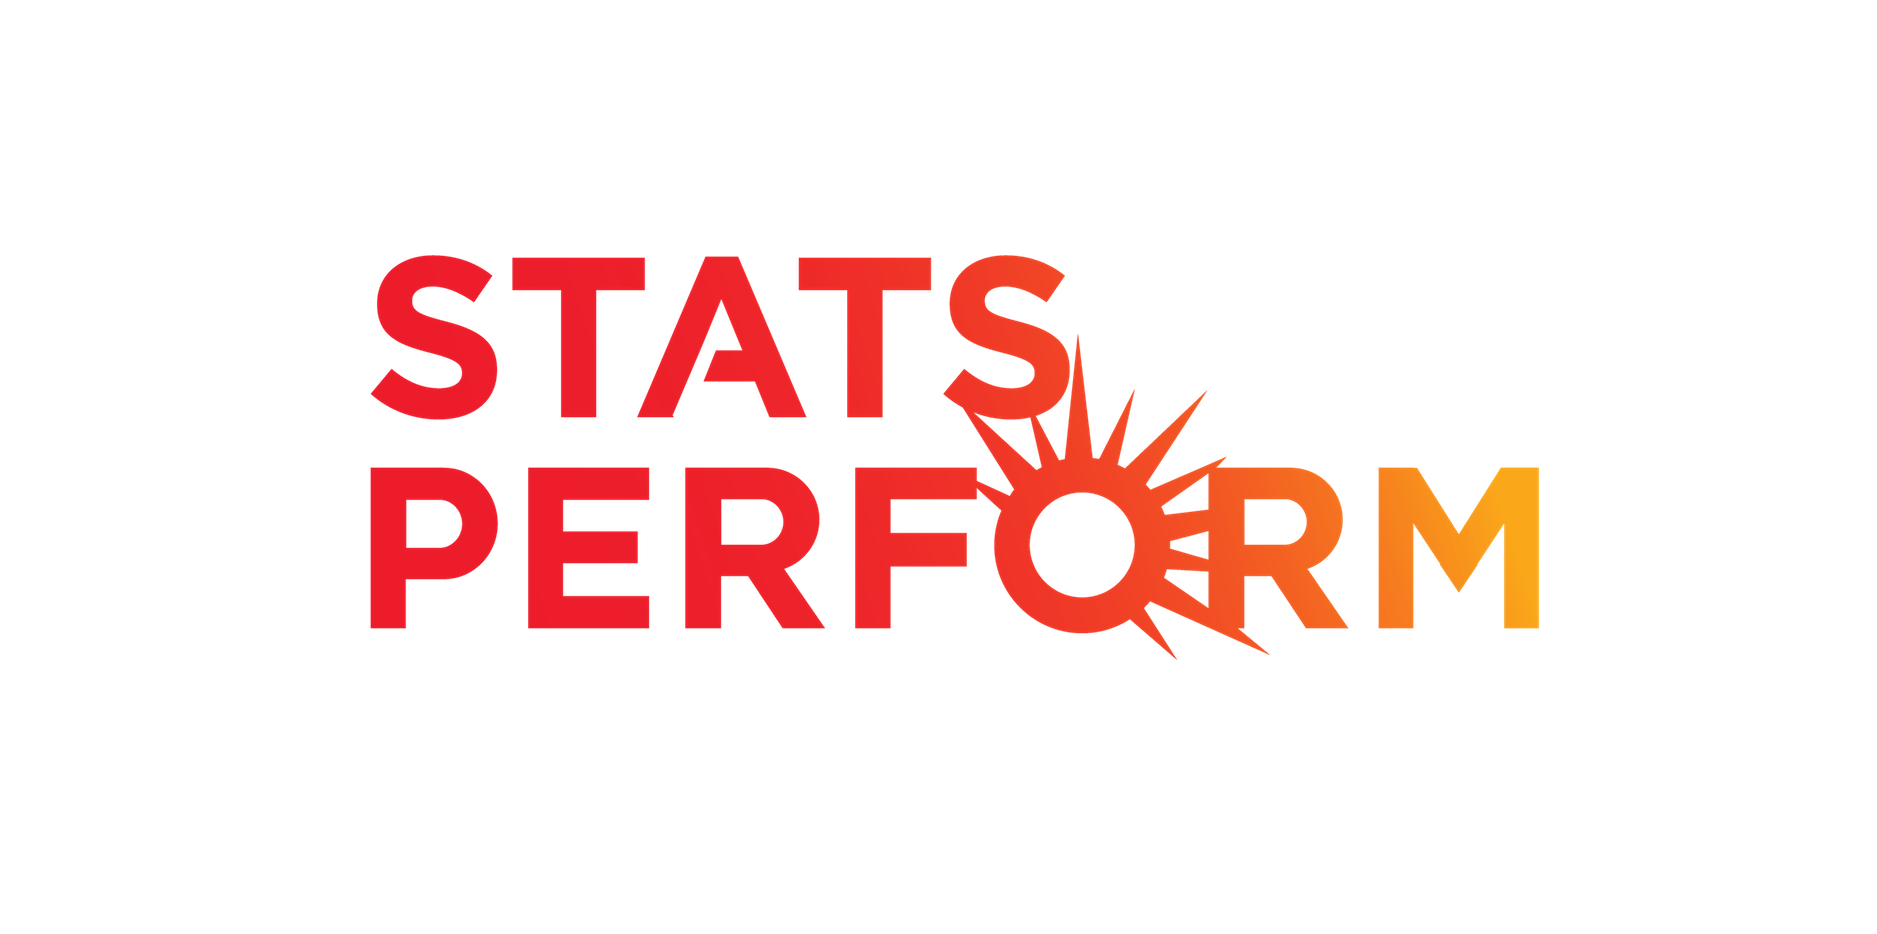 Stats Perform